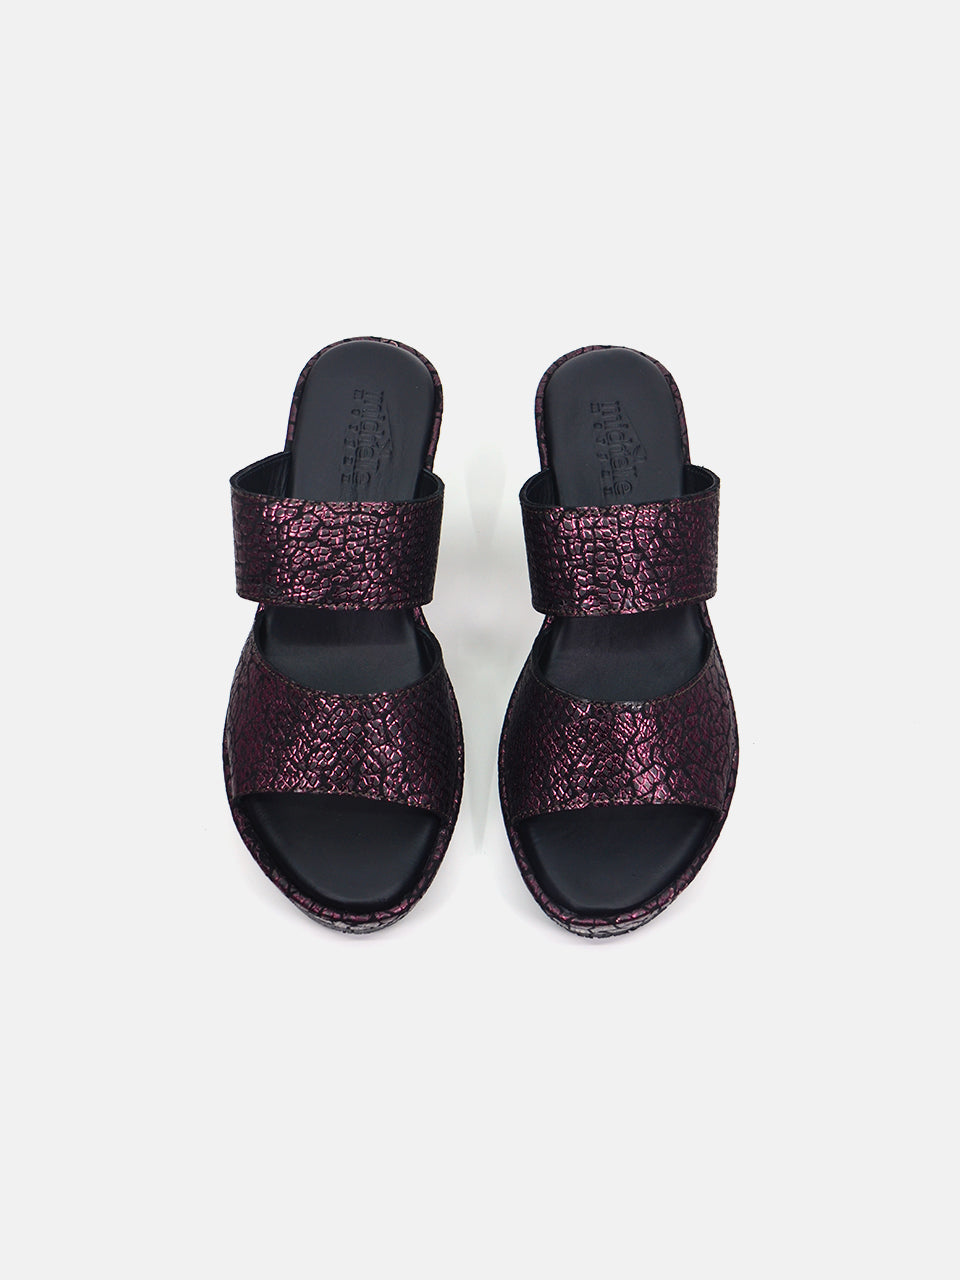 Michelle Morgan MM-302 Women's Wedge Sandals #color_Maroon